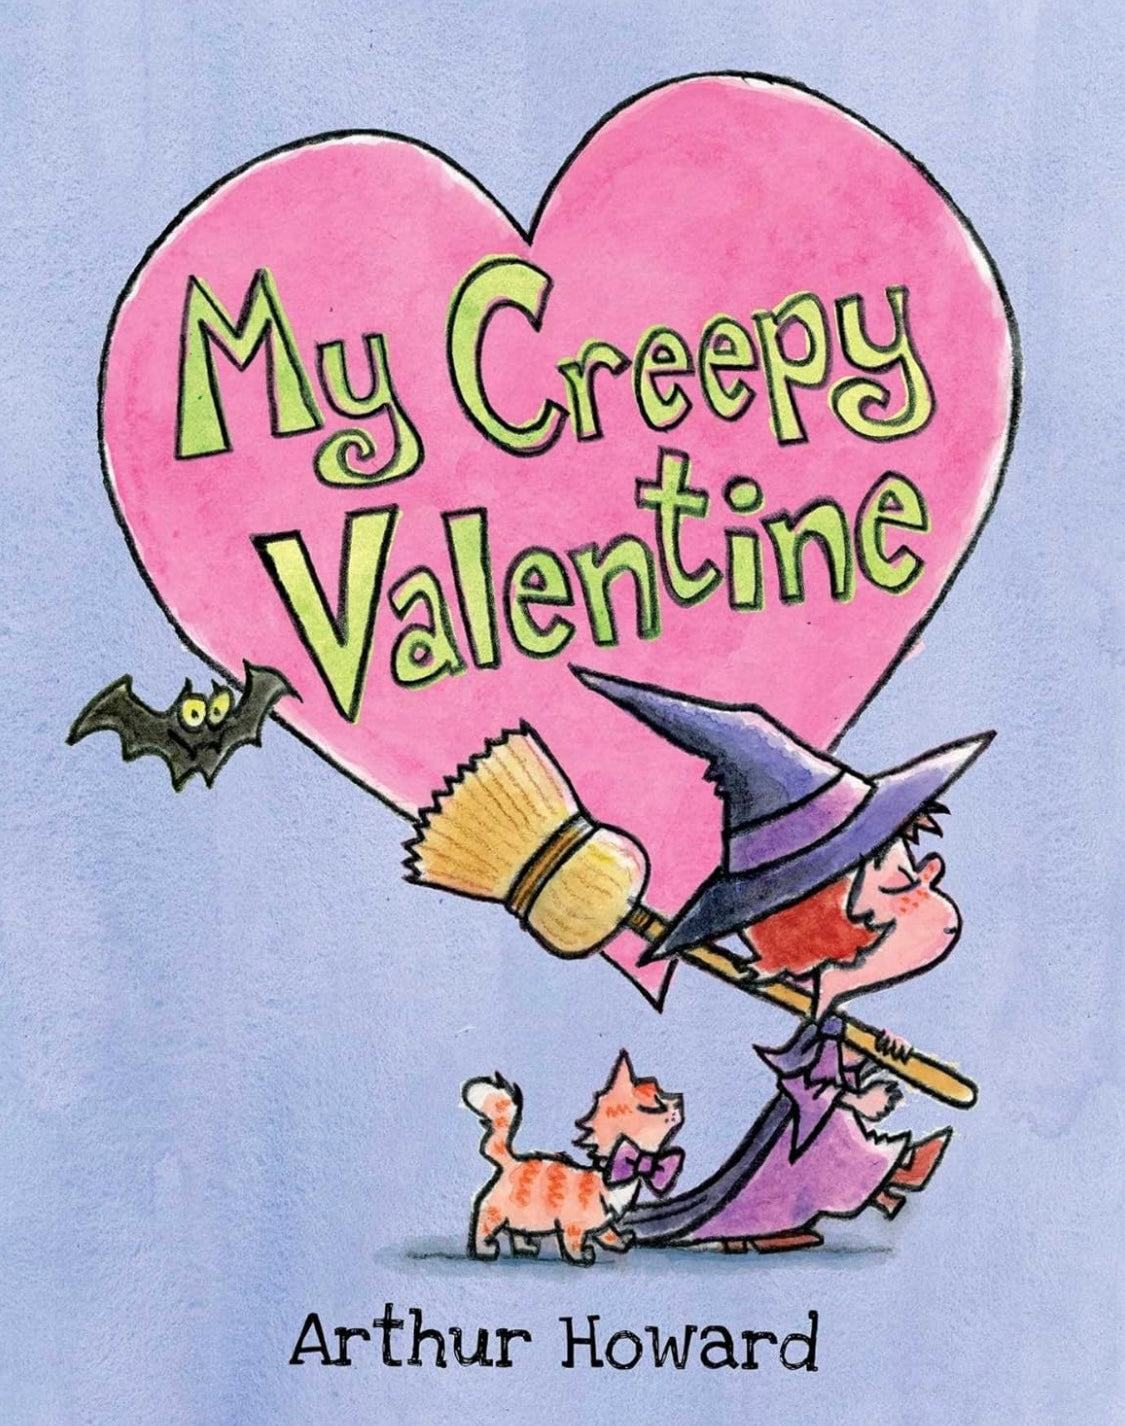 My Creepy Valentine by Arthur Howard